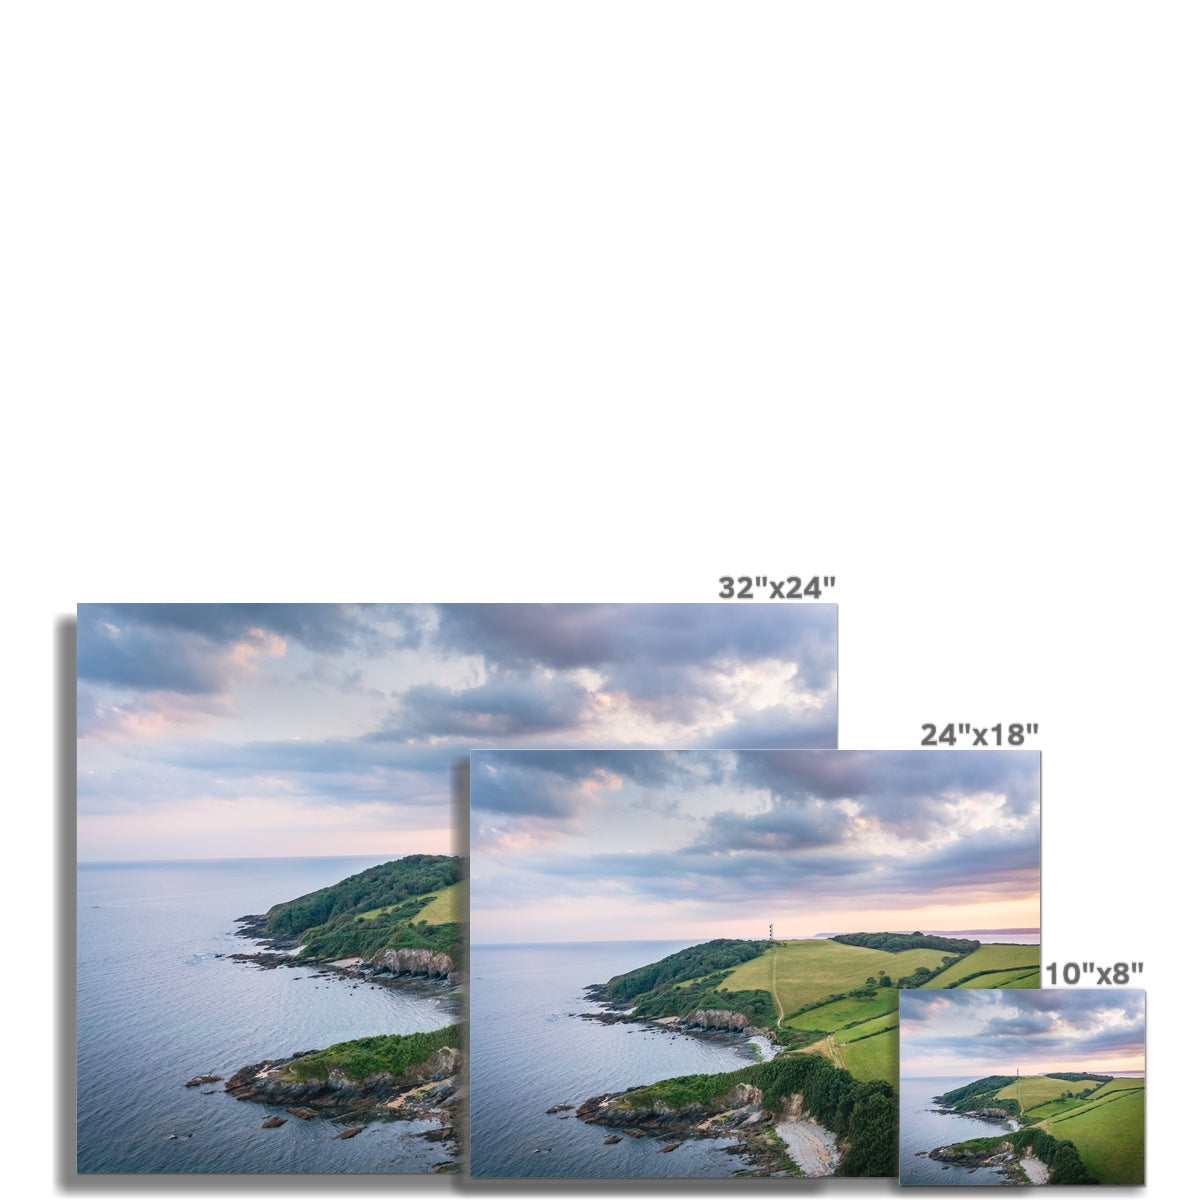 gribbin daymarker picture sizes